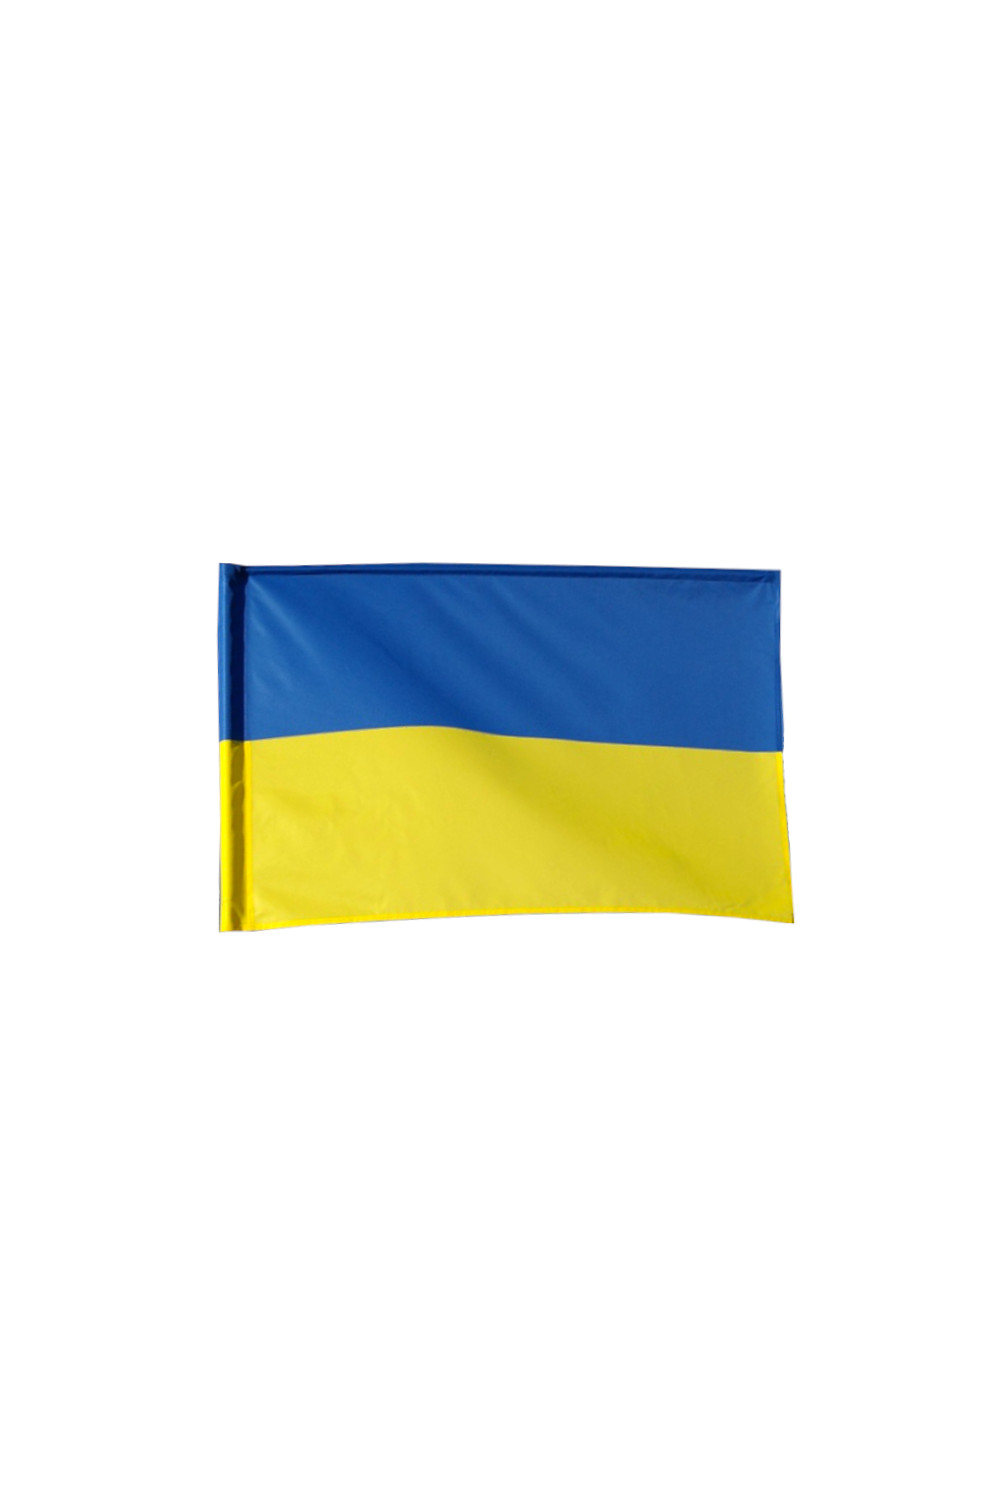 FLAGA UKRAINY UKRAINA Z TUNELEM UKRAIŃSKA 150x90